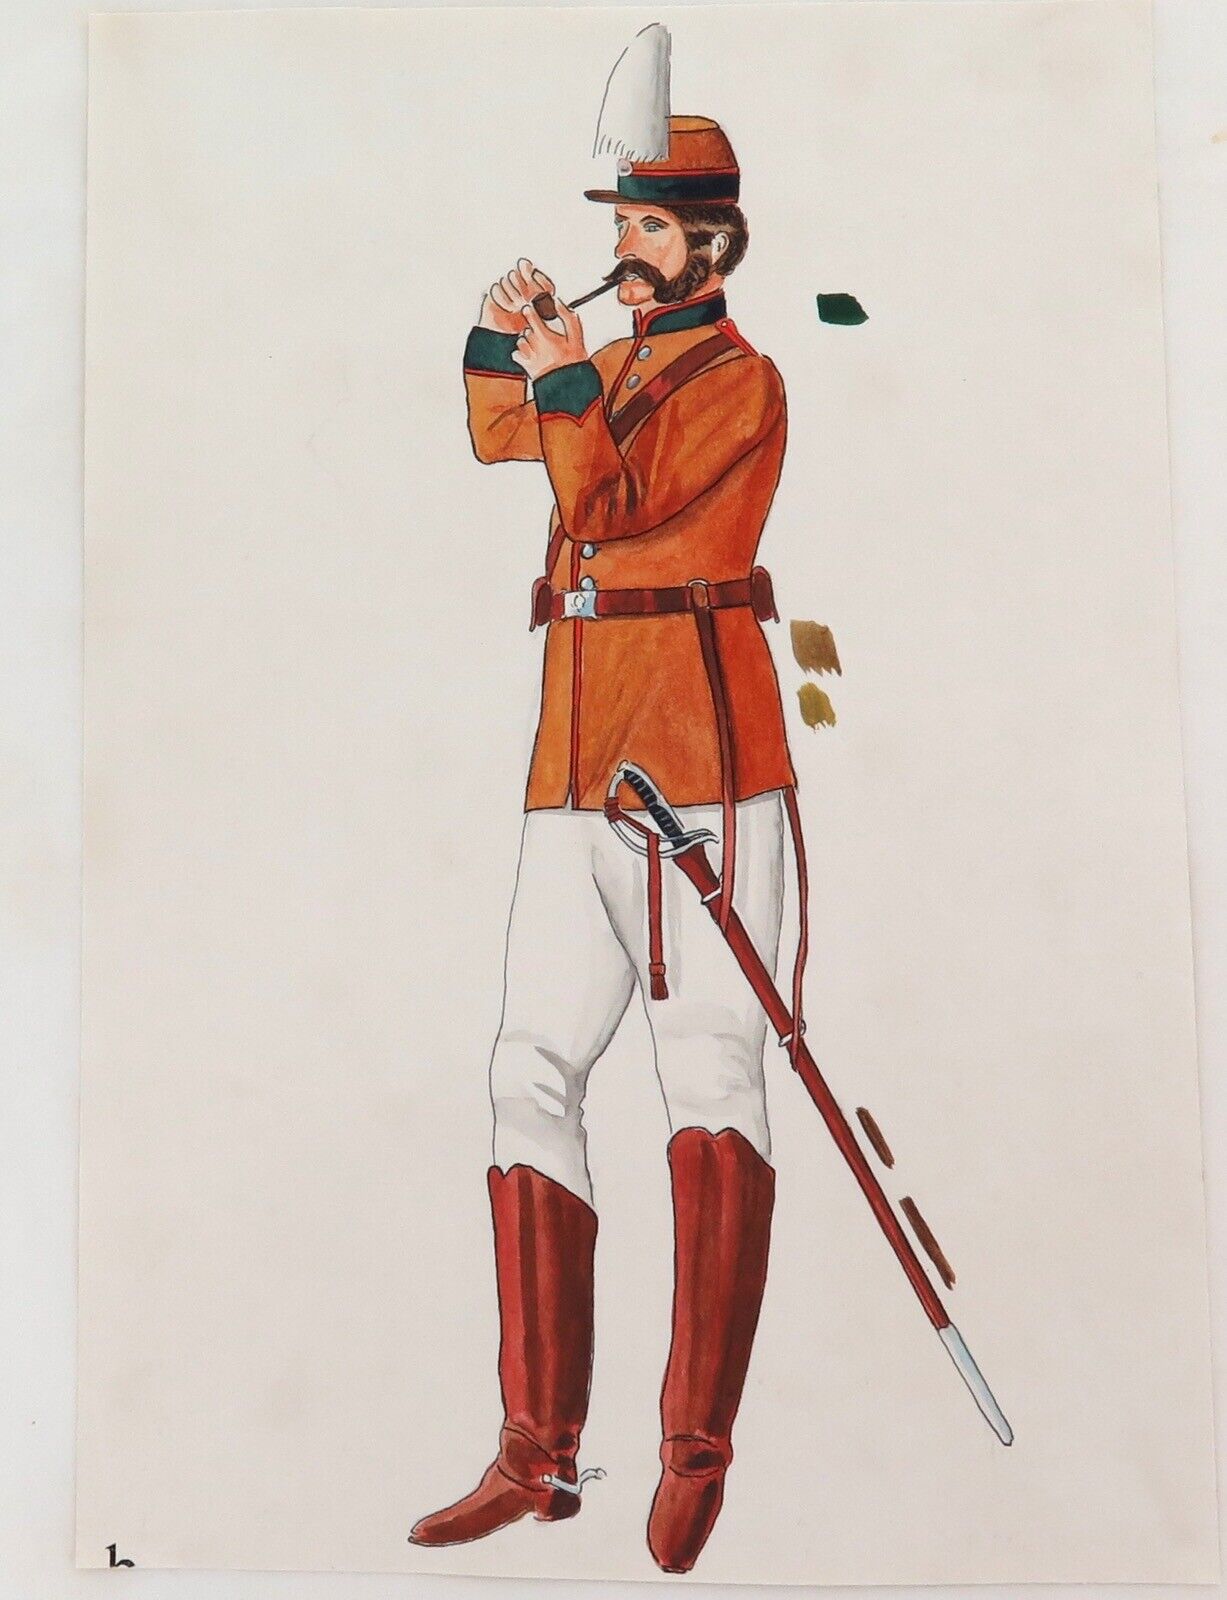 Rare Vintage British Military Uniform Original Book Artwork by L Barlow. #8